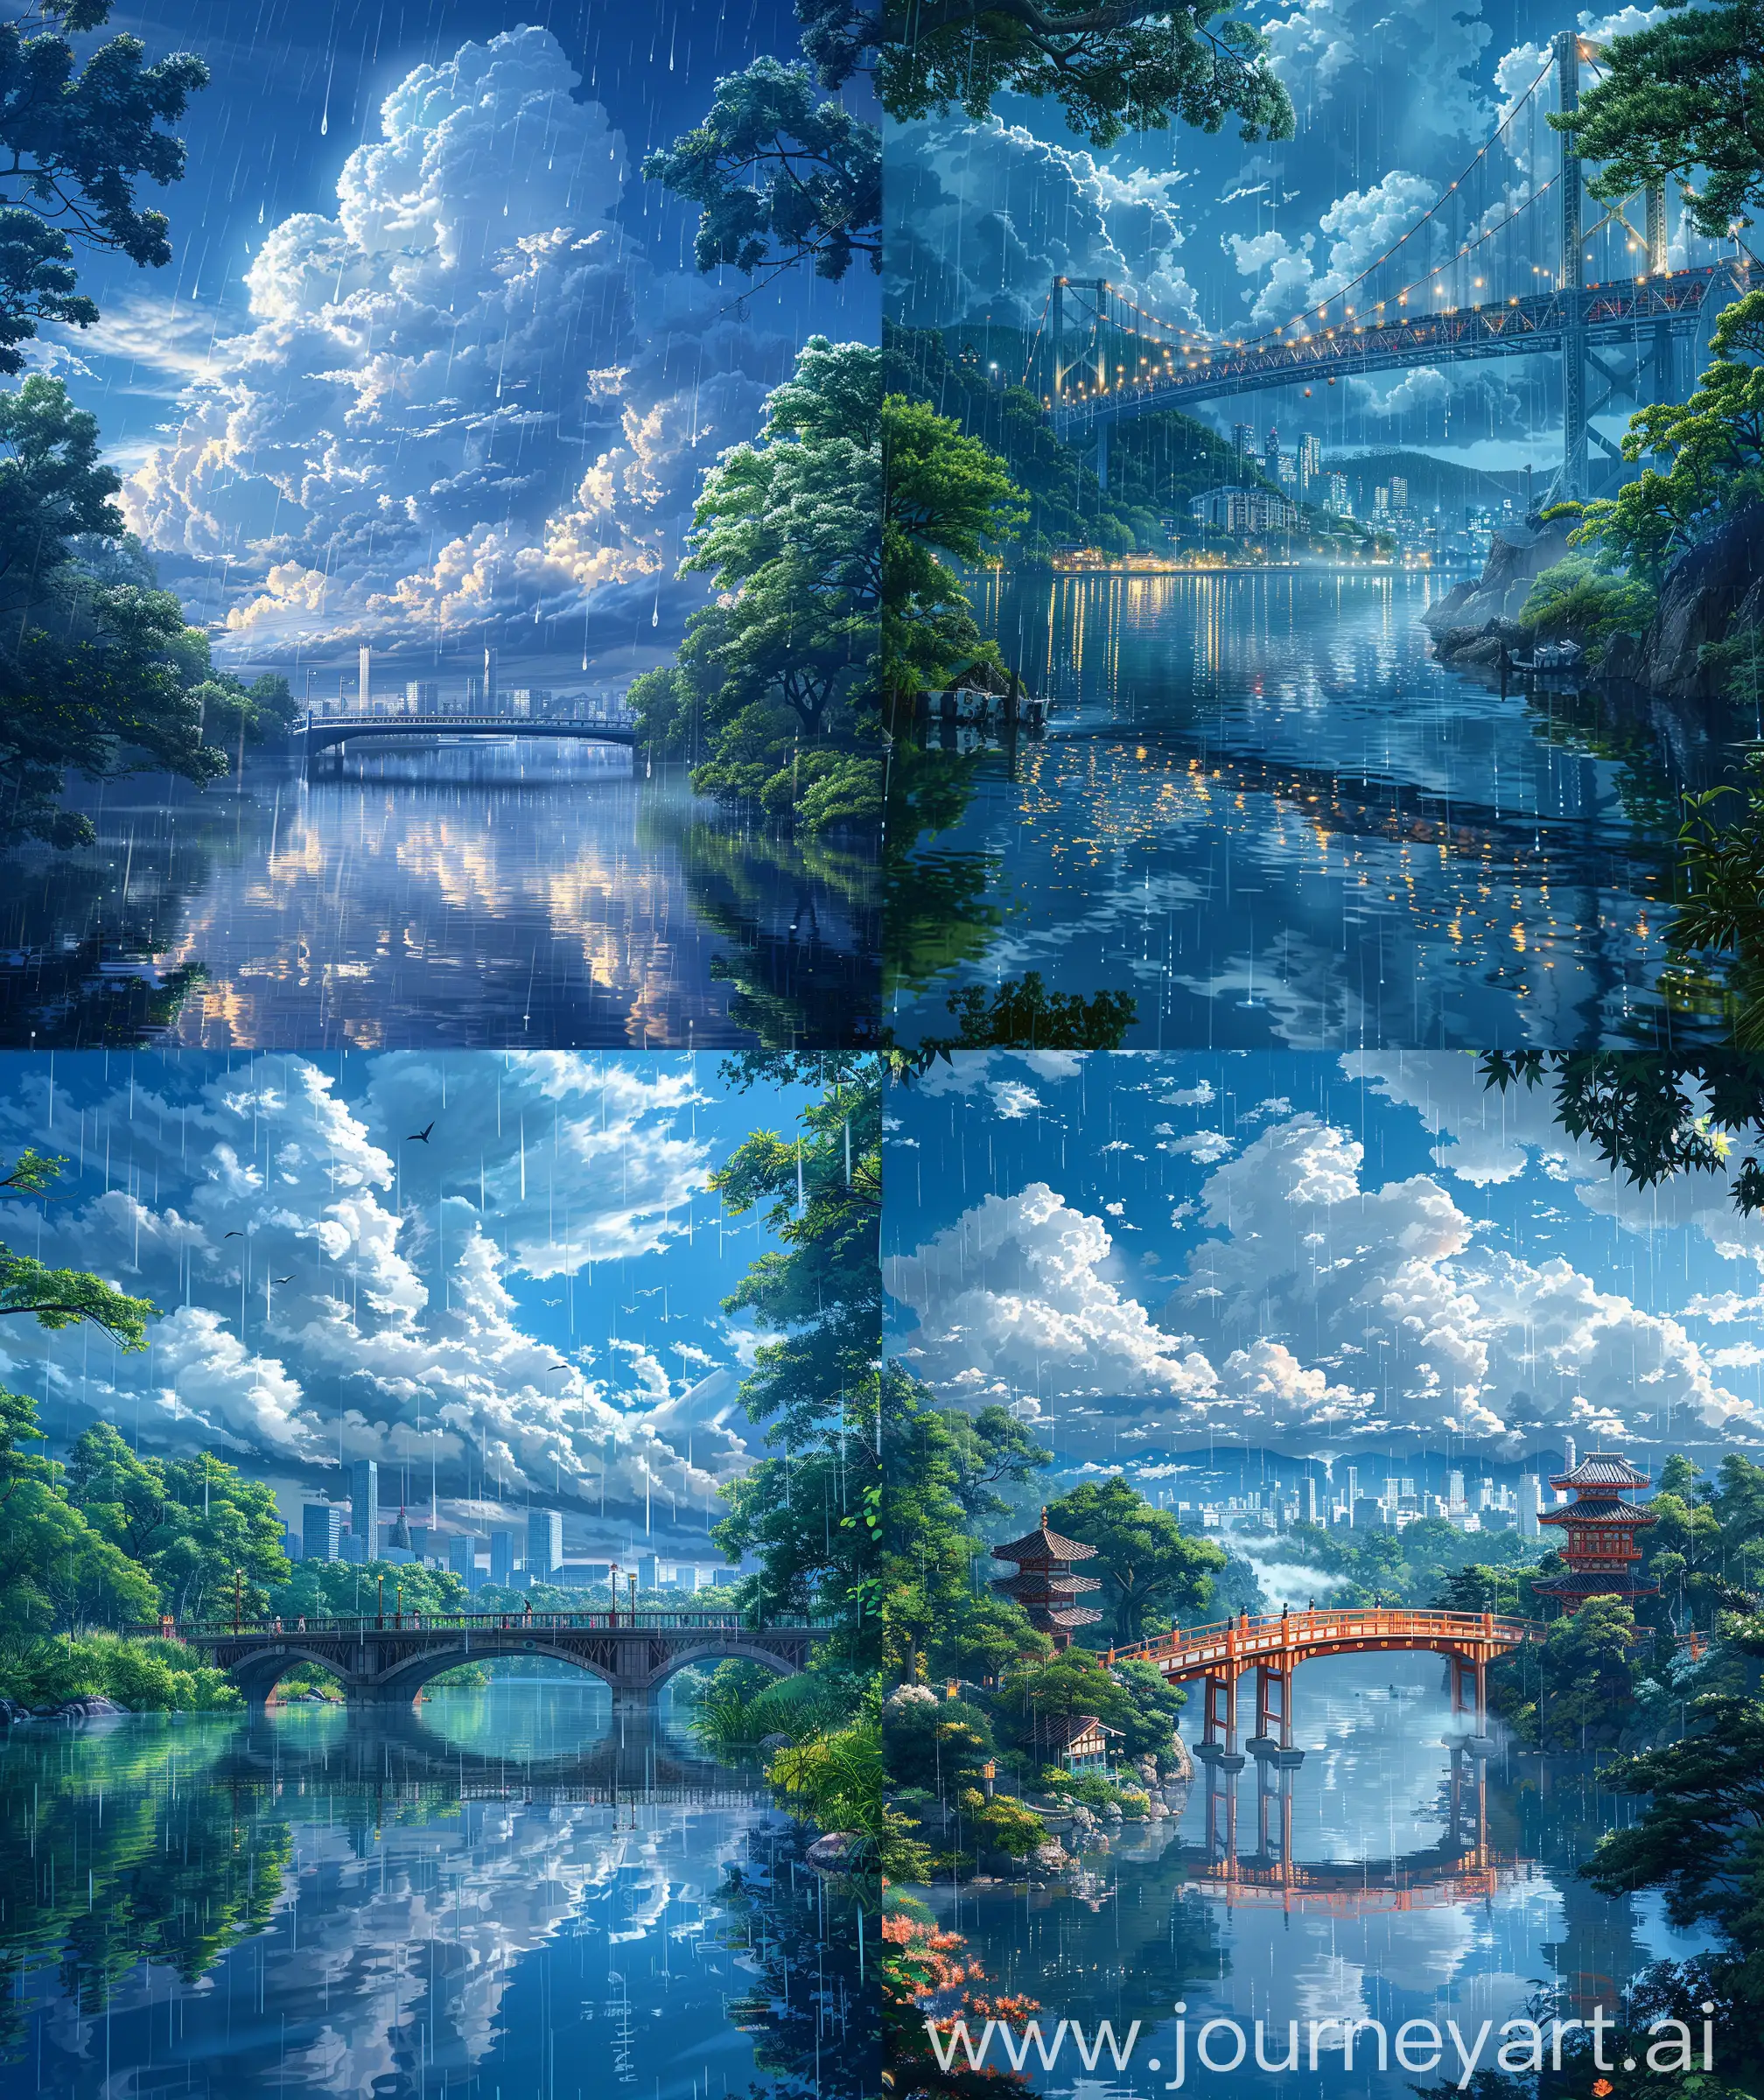 Anime-Cityscape-Serene-Bridge-Overlooking-Reflective-Waters-Under-Rainy-Skies